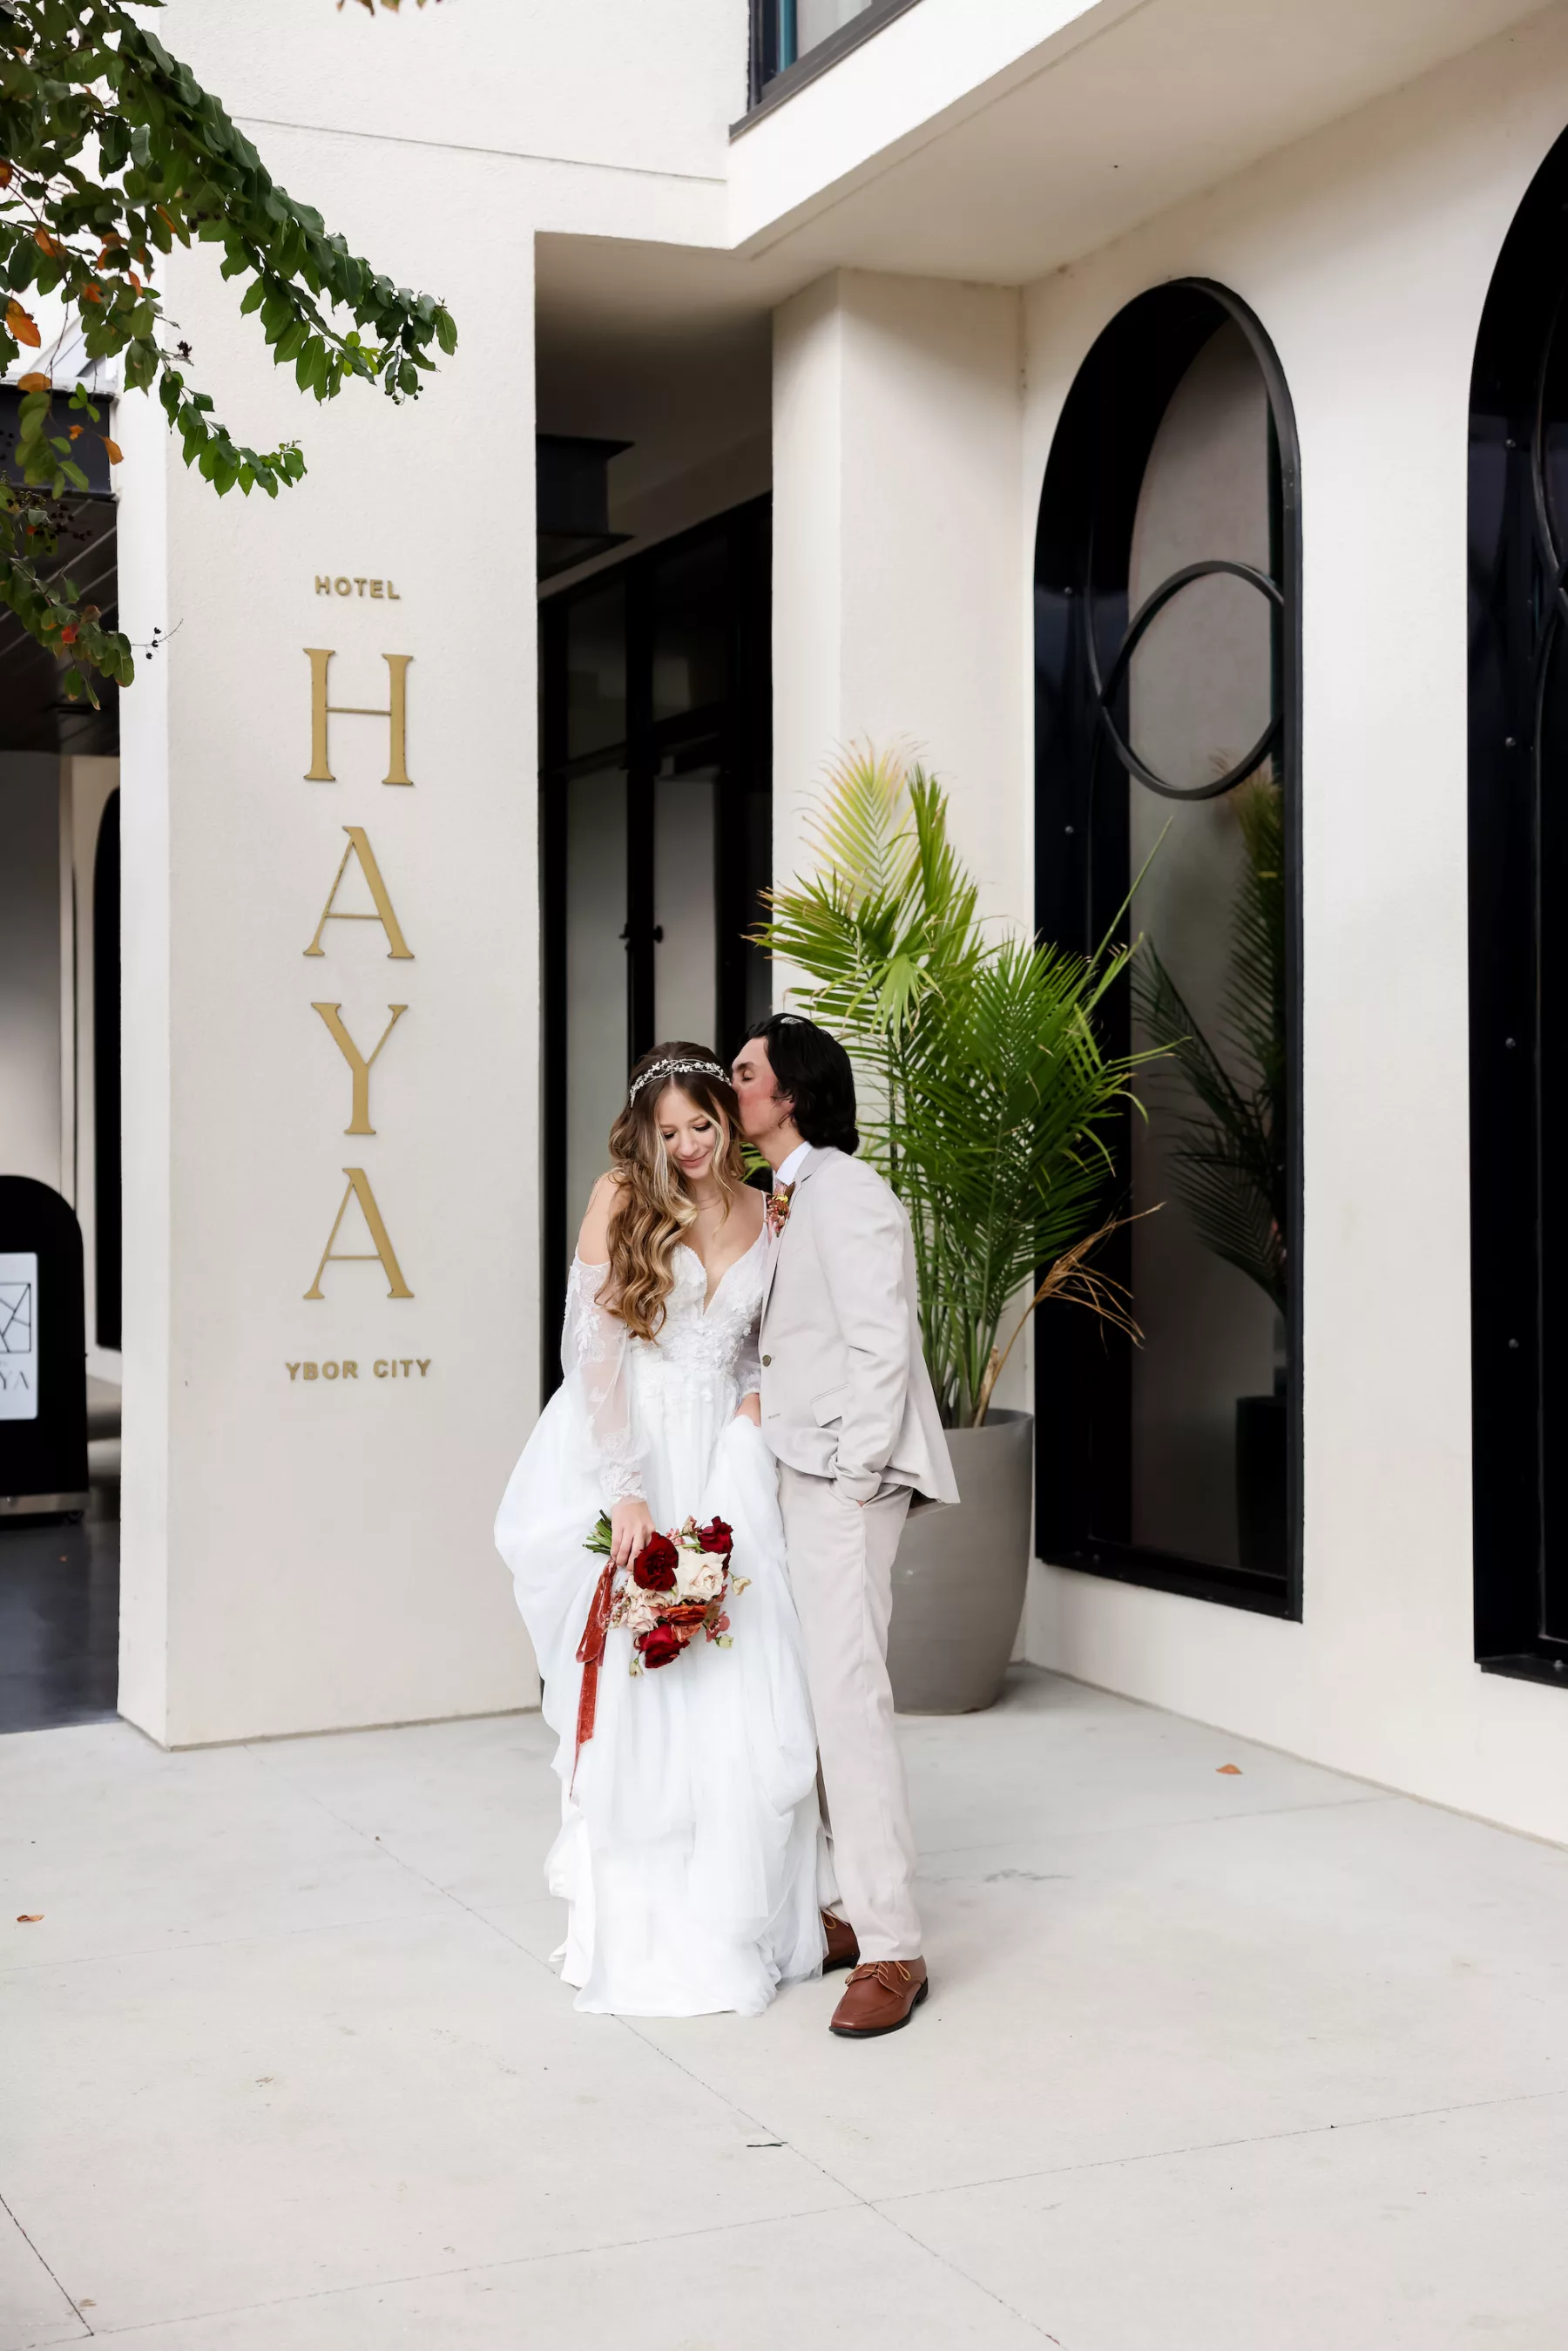 Bride and Groom Wedding Portrait | Ybor Event Venue Hotel Haya | Photographer Lifelong Photography Studio